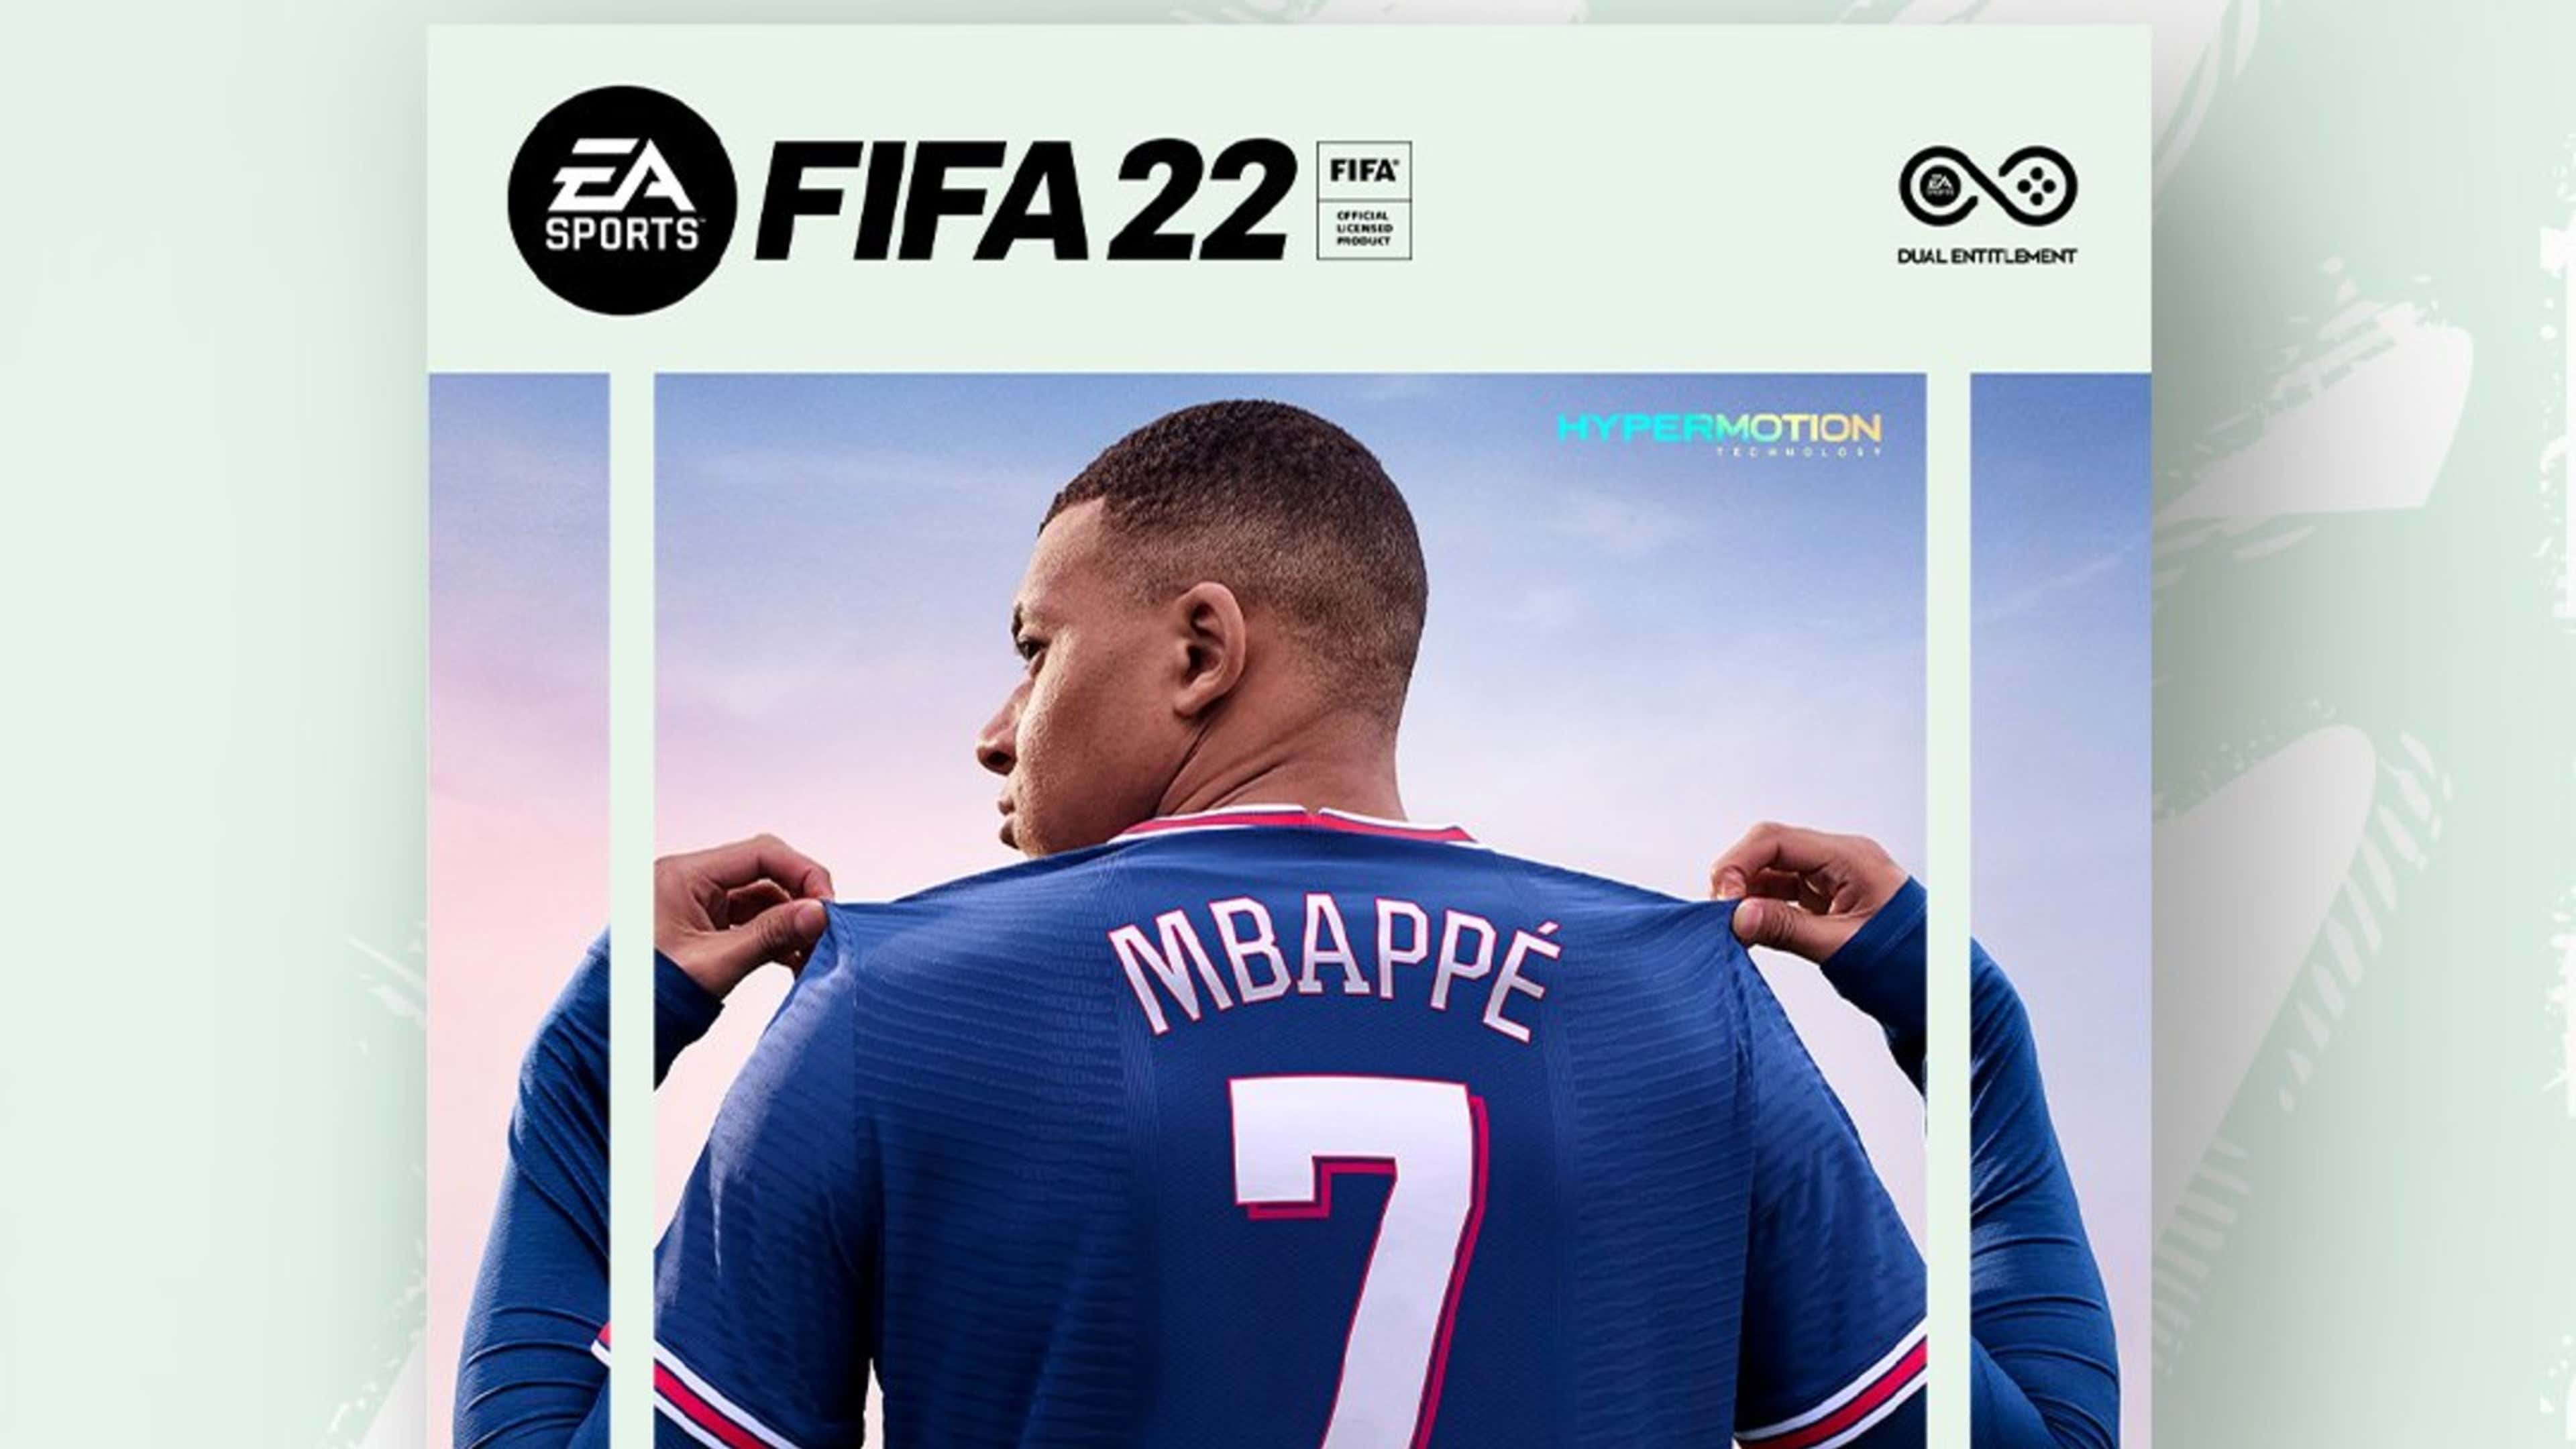 Kylian Mbappe FIFA 22 cover 1920x1080